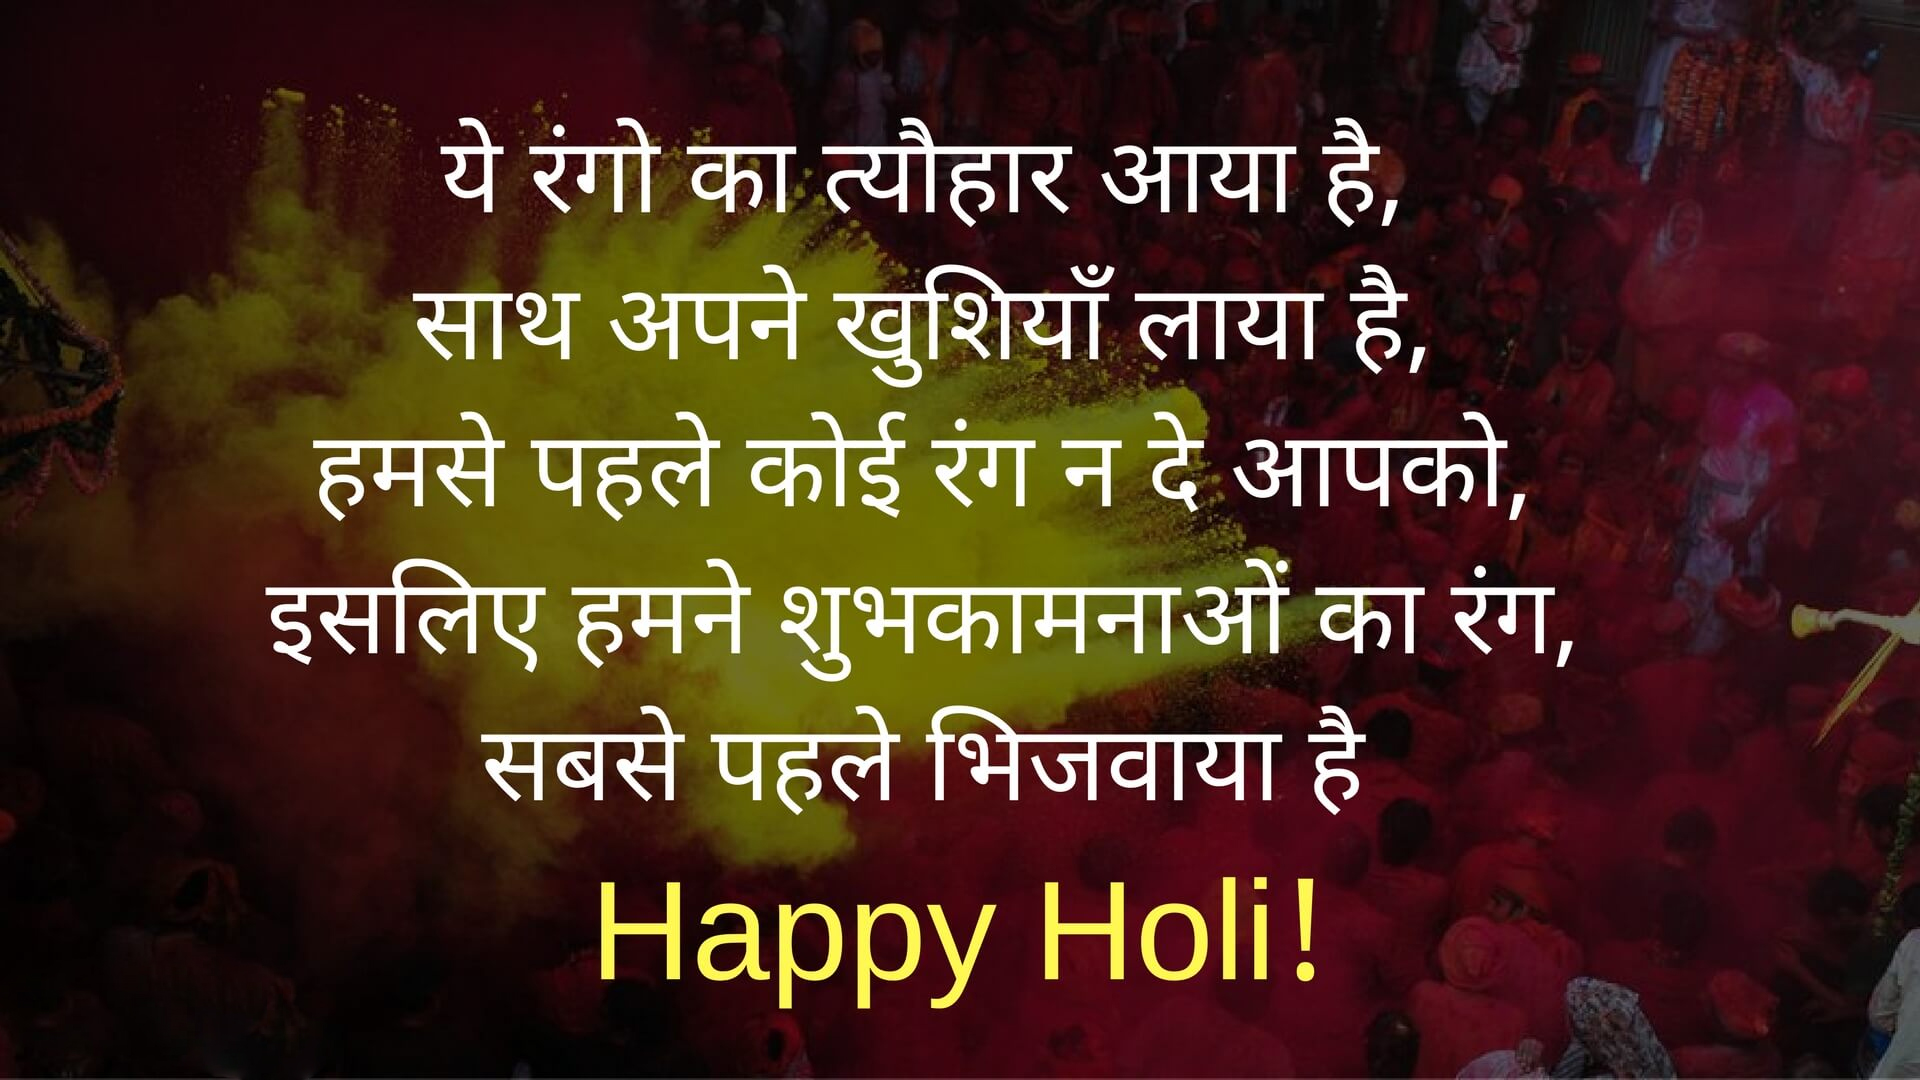 Holi Wishes In Hindi Hd Images Free Download - Vashikaran Mantra In Hindi - HD Wallpaper 